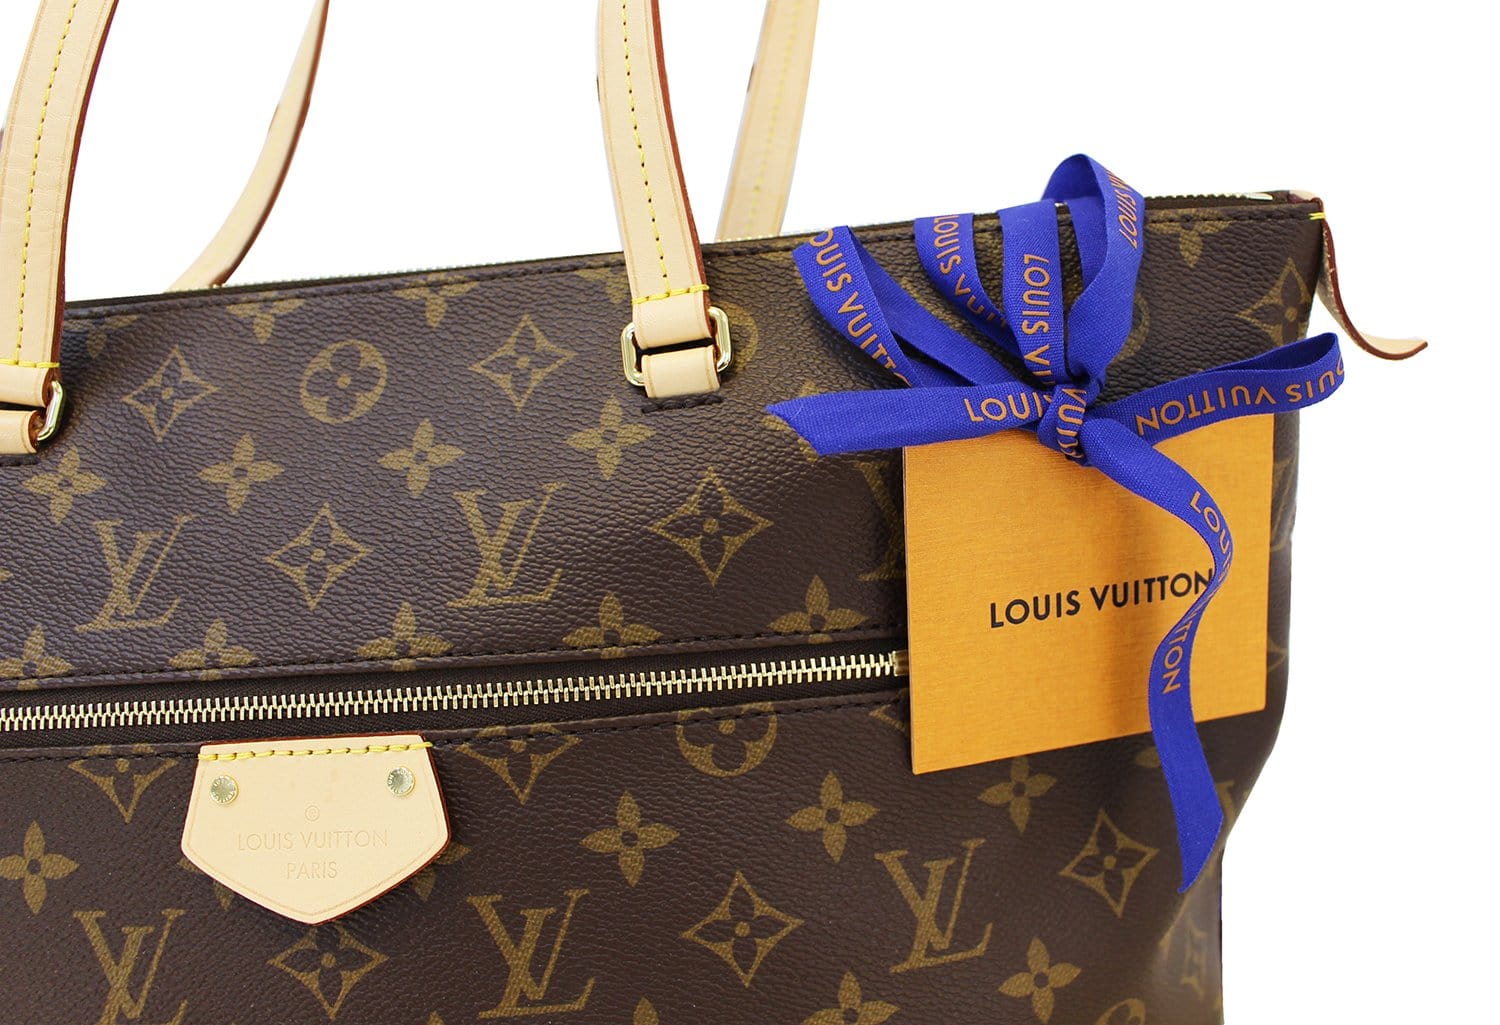 Louiss-vuitton Monogram Leather Bag Lo.u.is Vui.tt.on Bag 